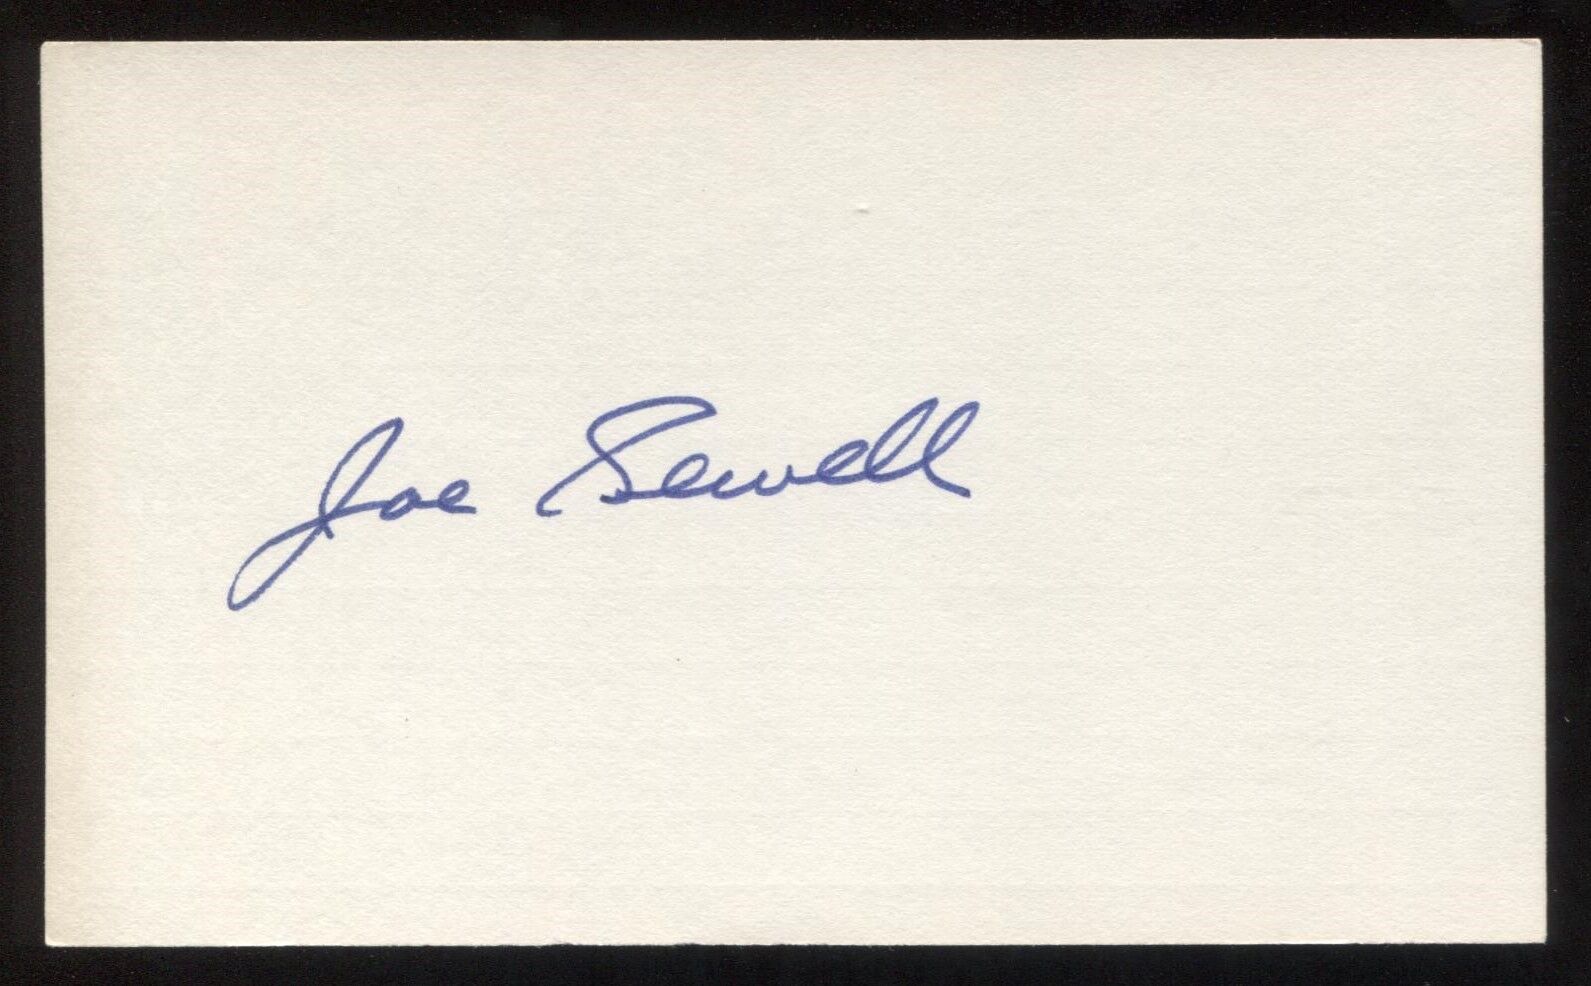 Joe Sewell Signed 3x5 Index Card Autographed Vintage Baseball Hall of Fame